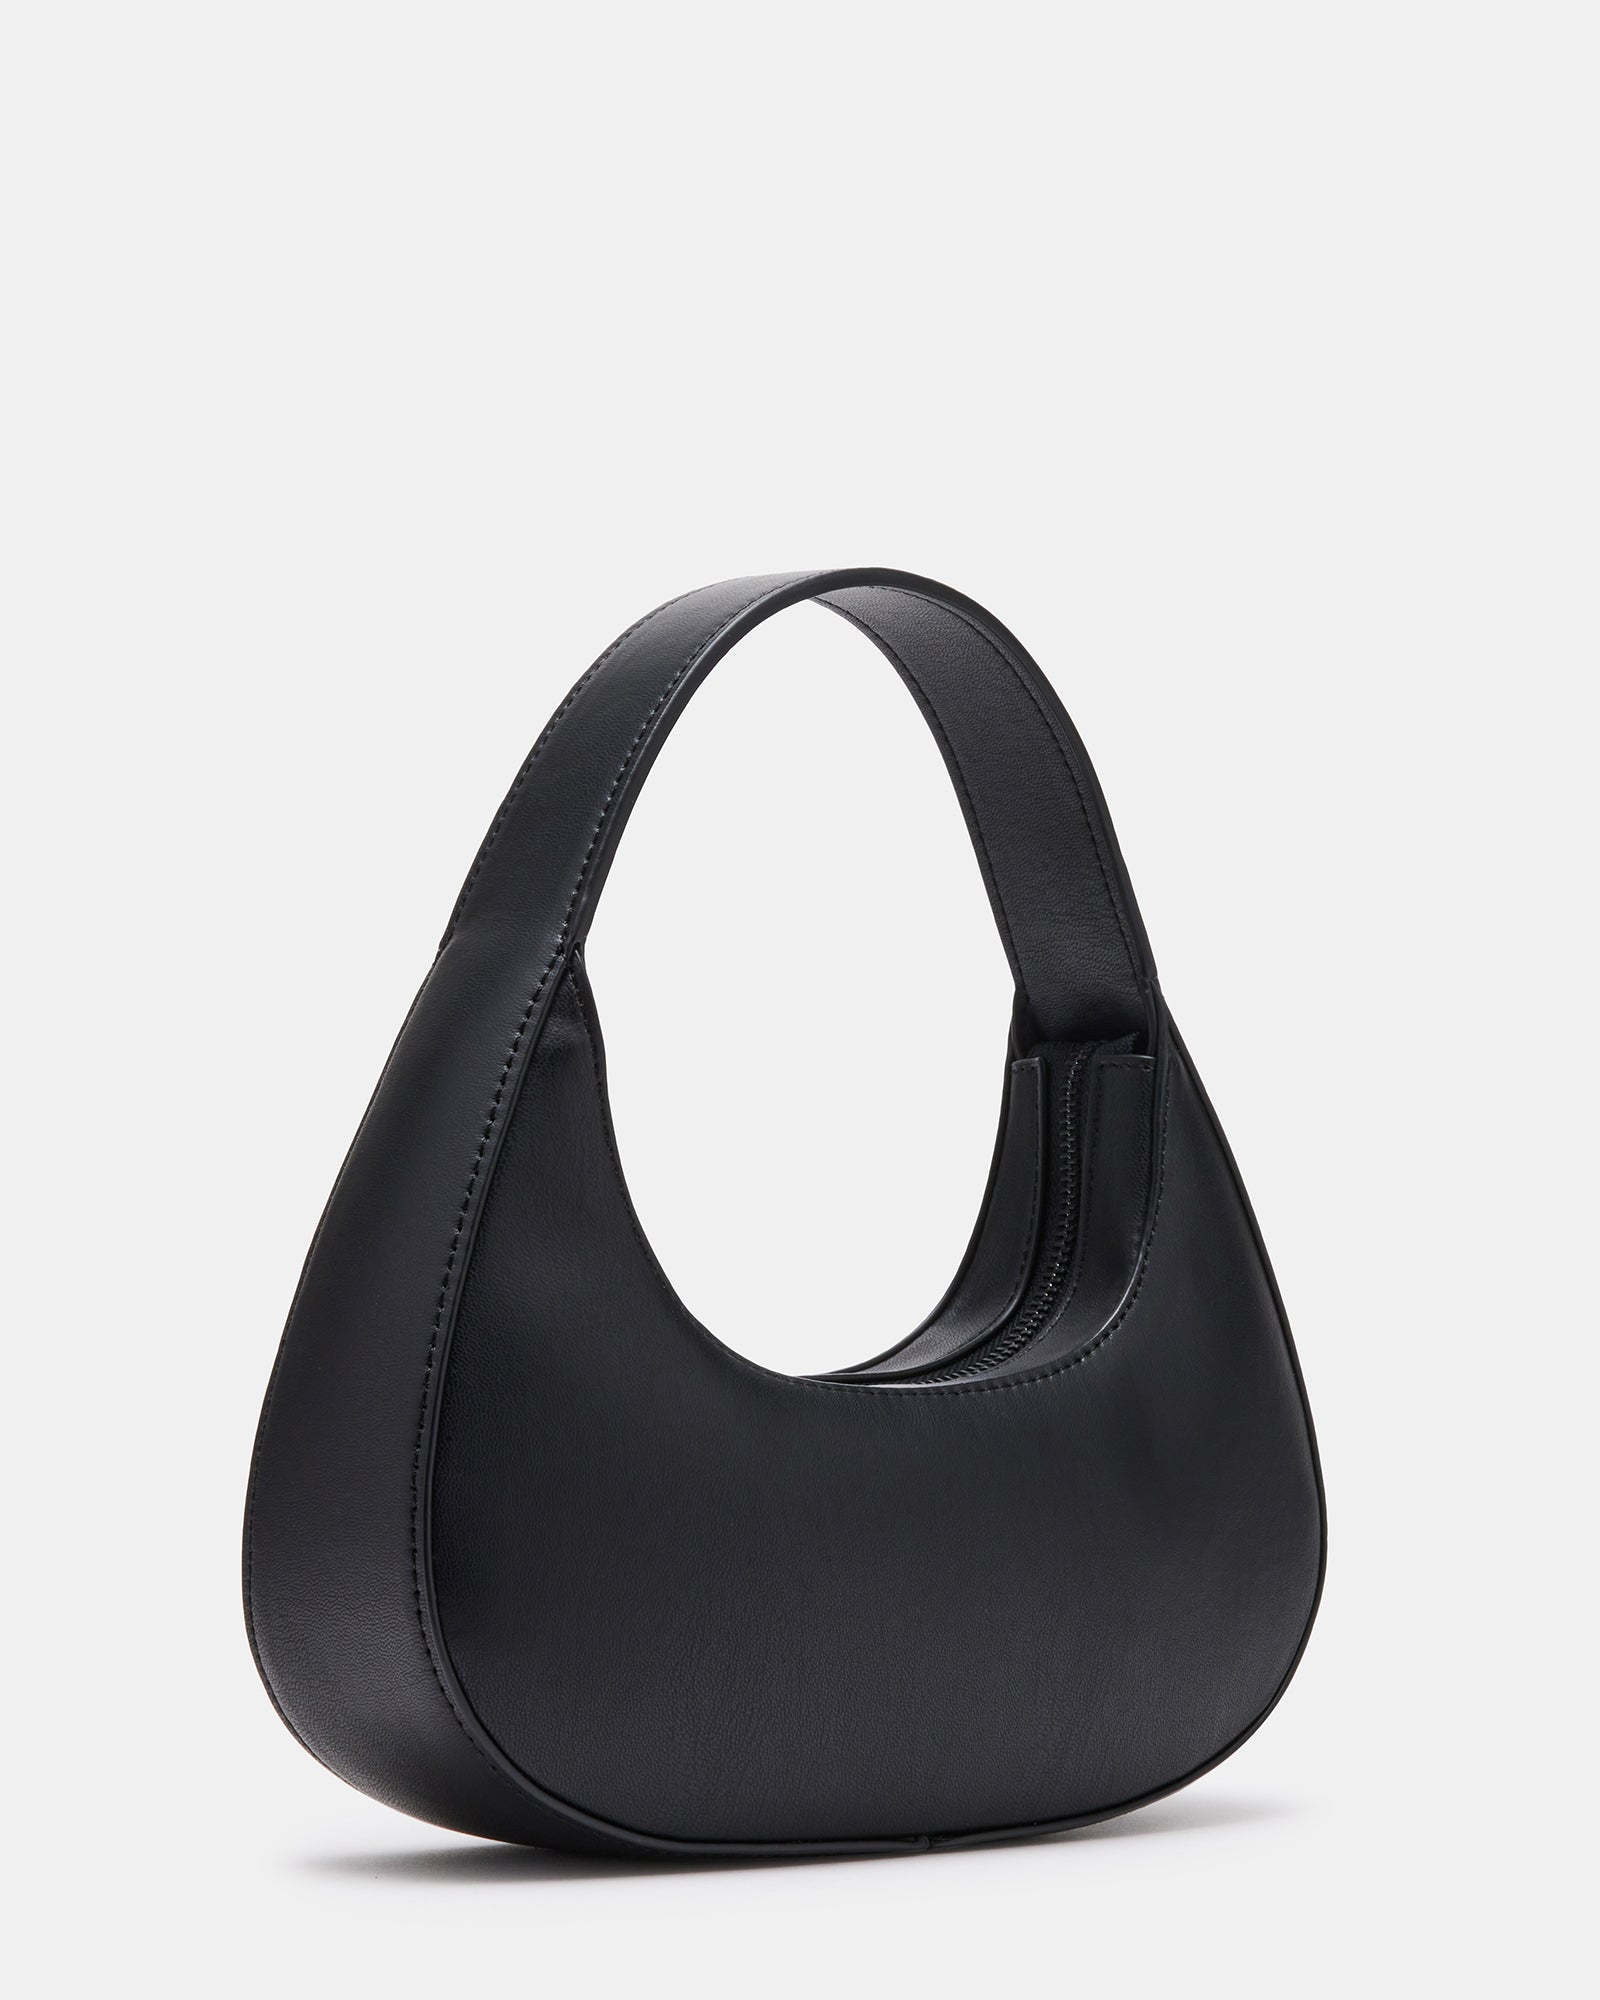 KOA Bag Black | Women's Top Handle Shoulder Bag – Steve Madden